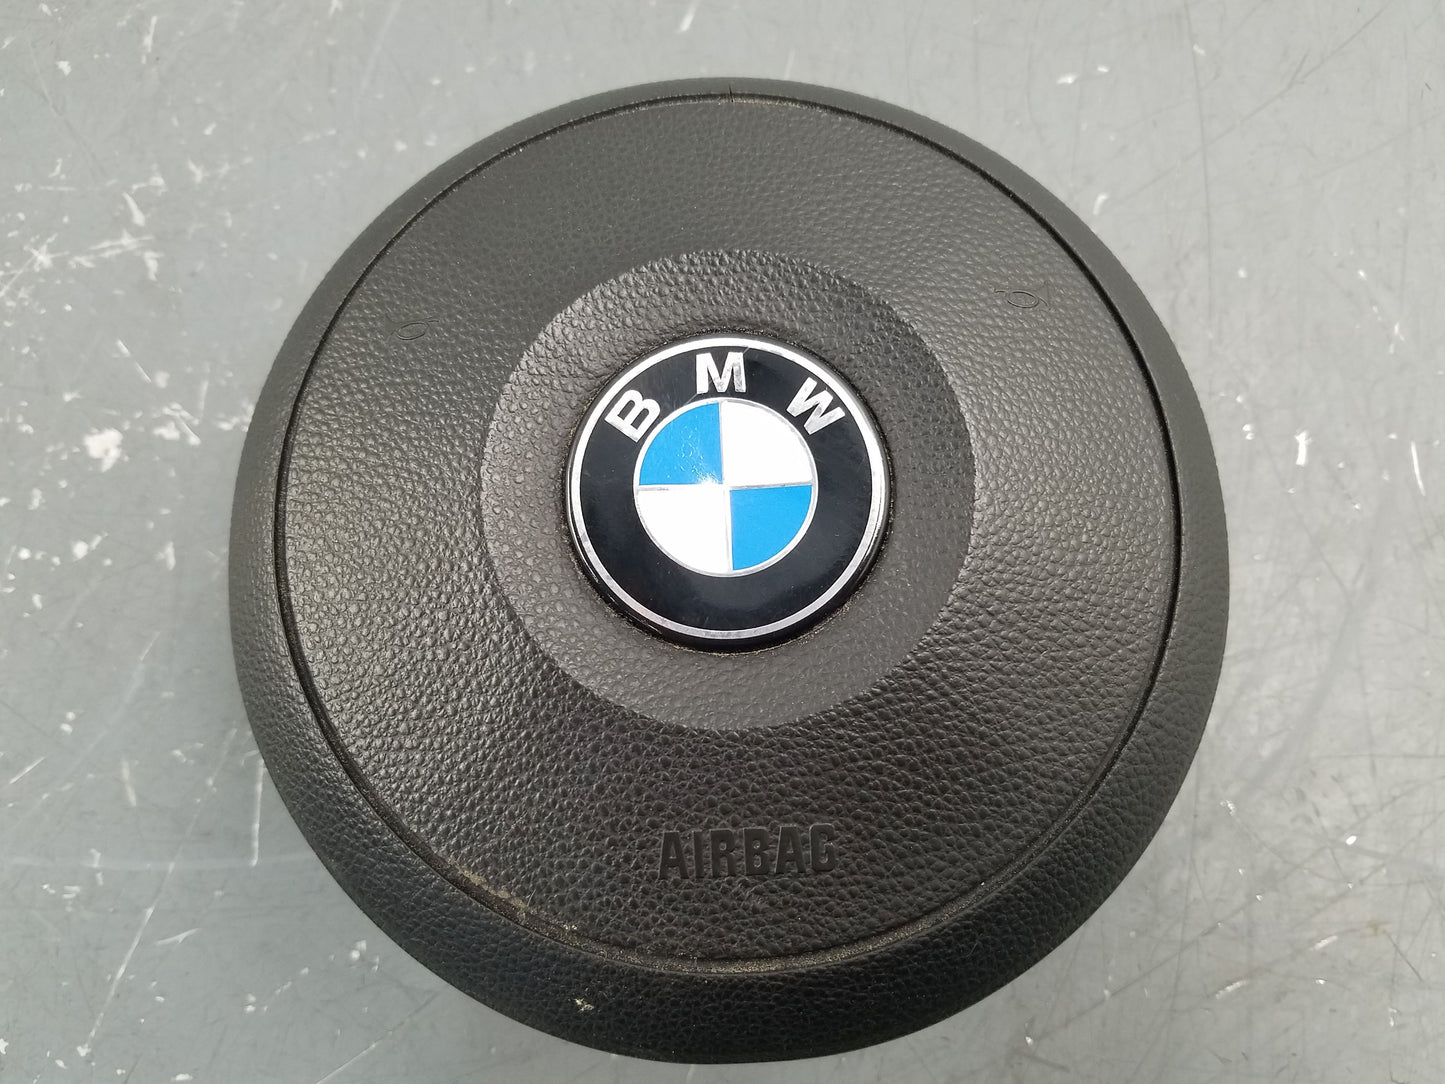 2006 BMW M6 E63 Steering Wheel Airbag #7640 G7